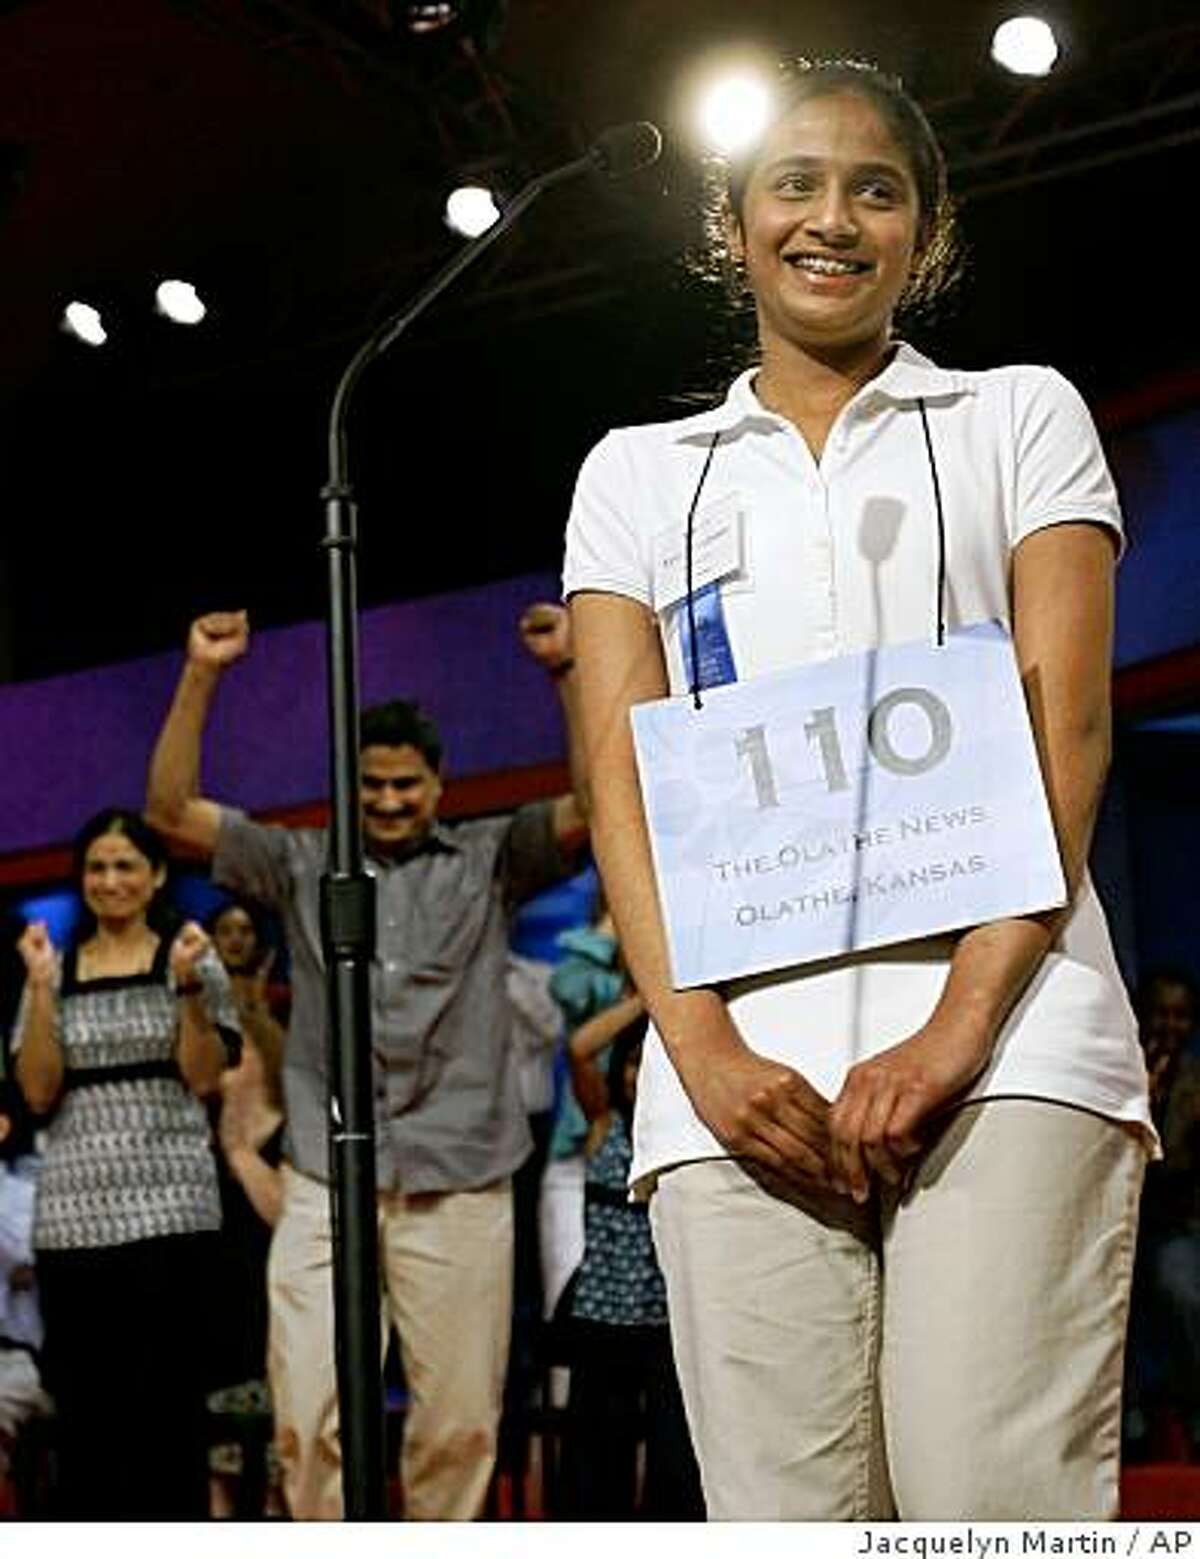 Kavya Shivashankar, 13, of Olathe, Kansas, wins the finals of the Scripps National Spelling Bee, in Washington, on Thursday, May 28, 2009. In the background her parents, Sandy Shivashankar, left, and Mirle Shivashankar celebrate. (AP Photo/Jacquelyn Martin)